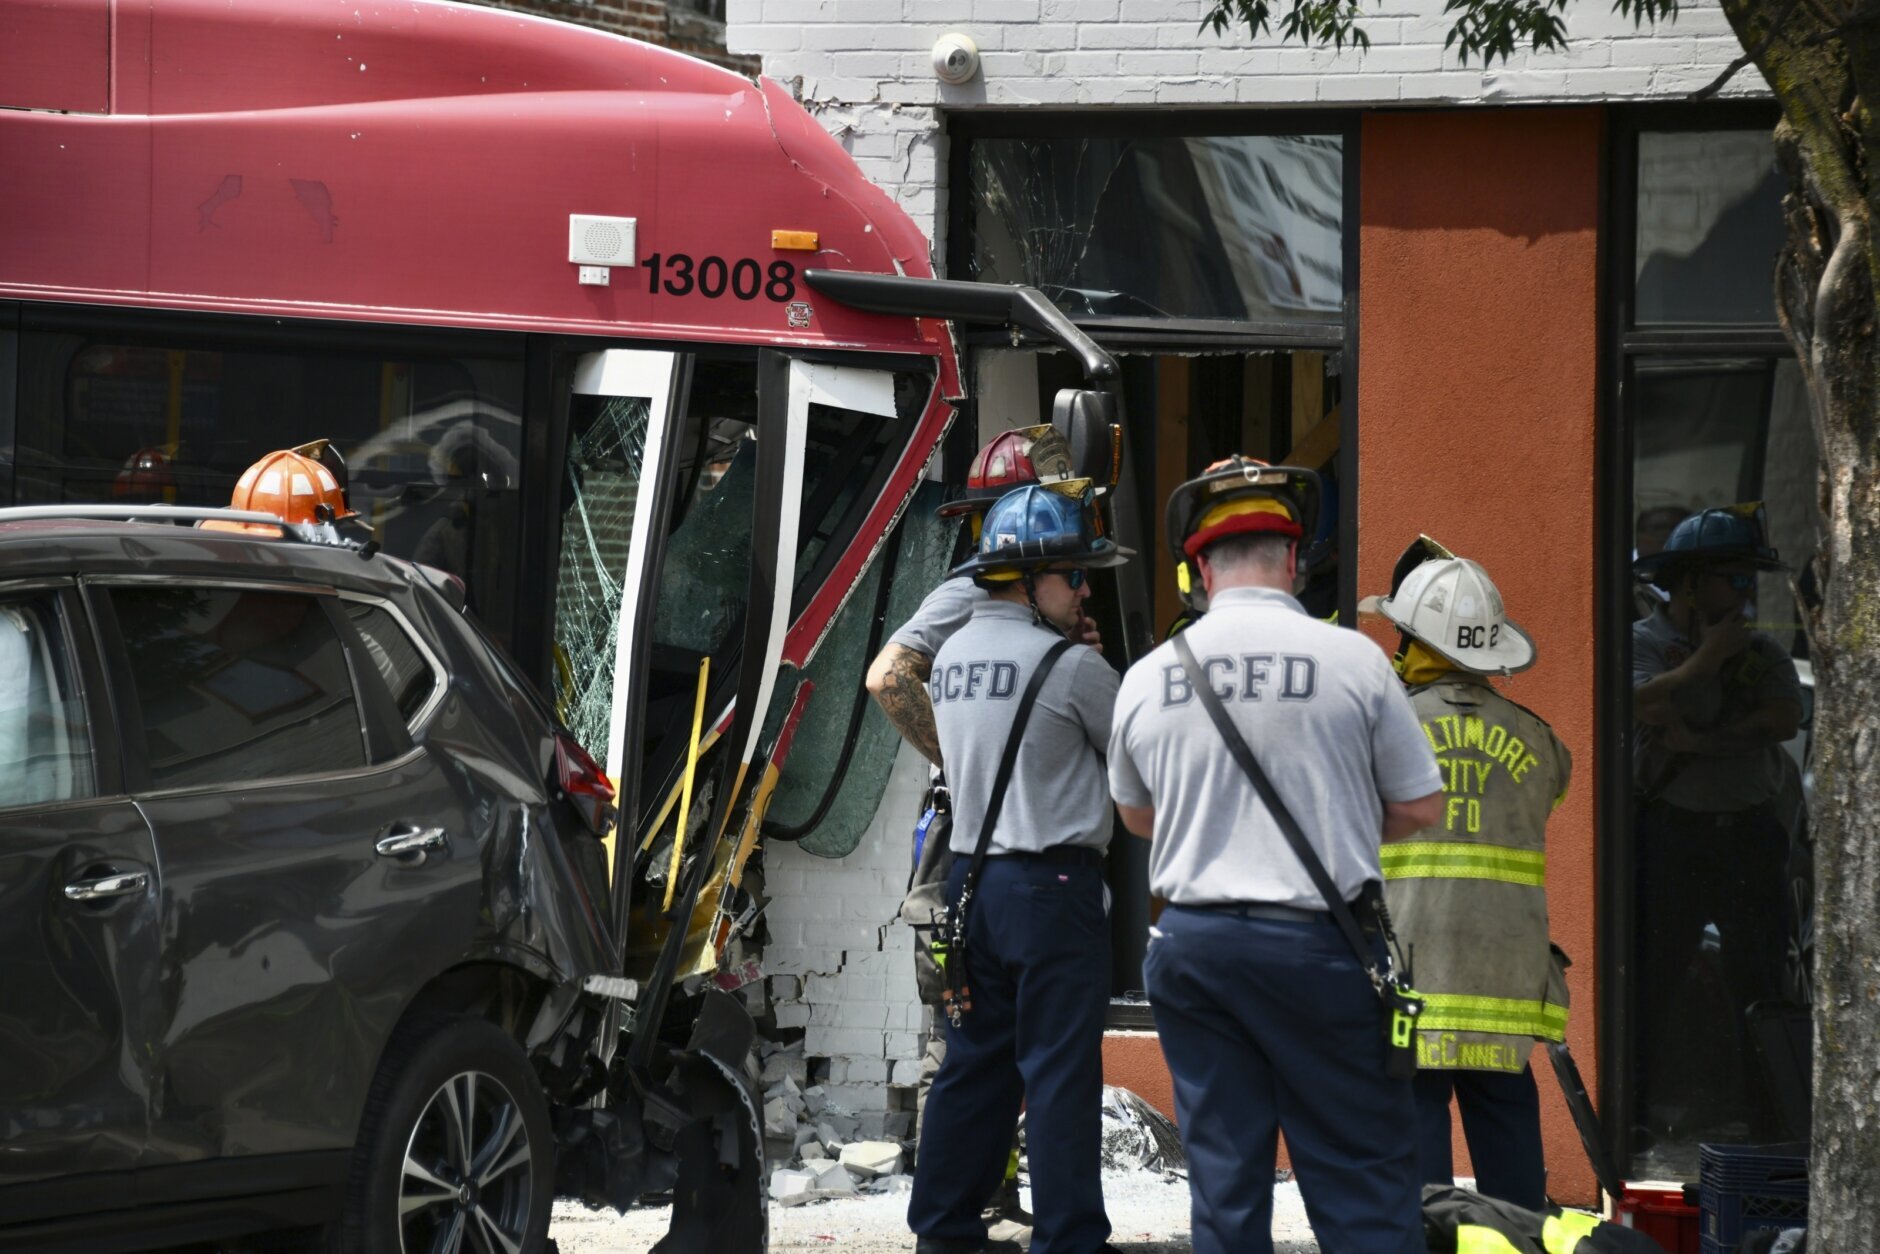 Baltimore Bus-Crash